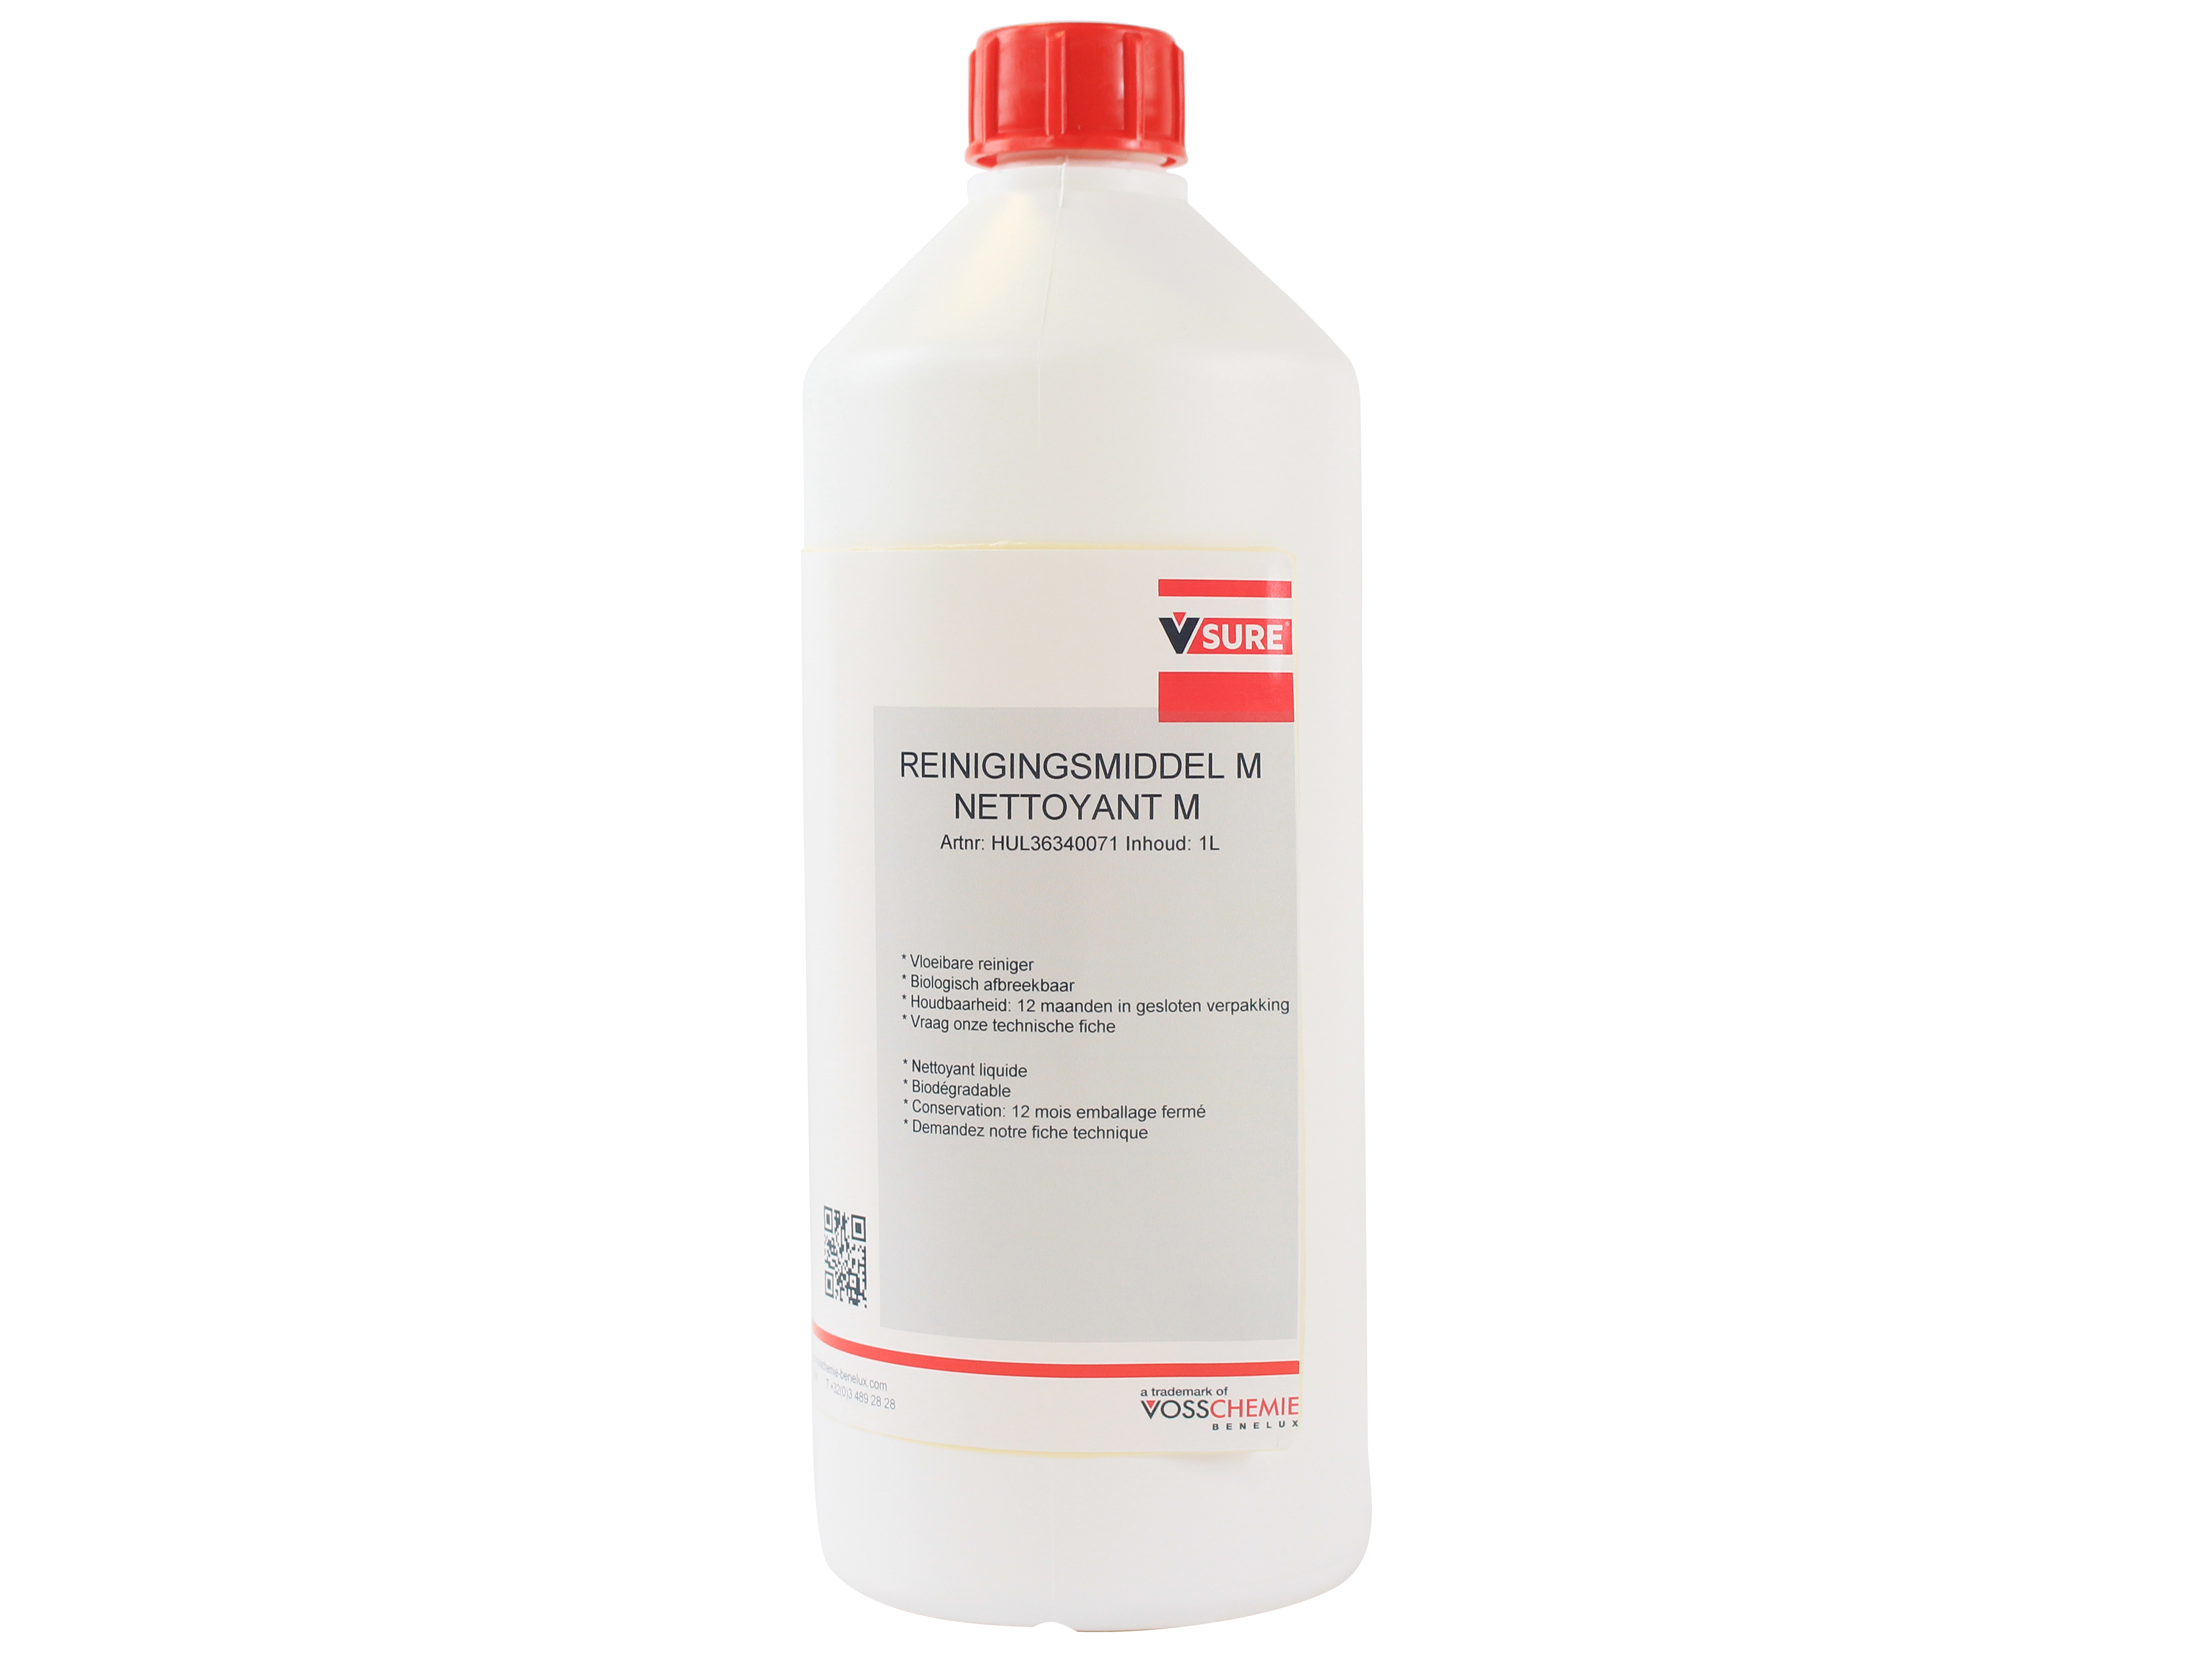 Spray nettoyant adhésif, colle, résine biodégradable